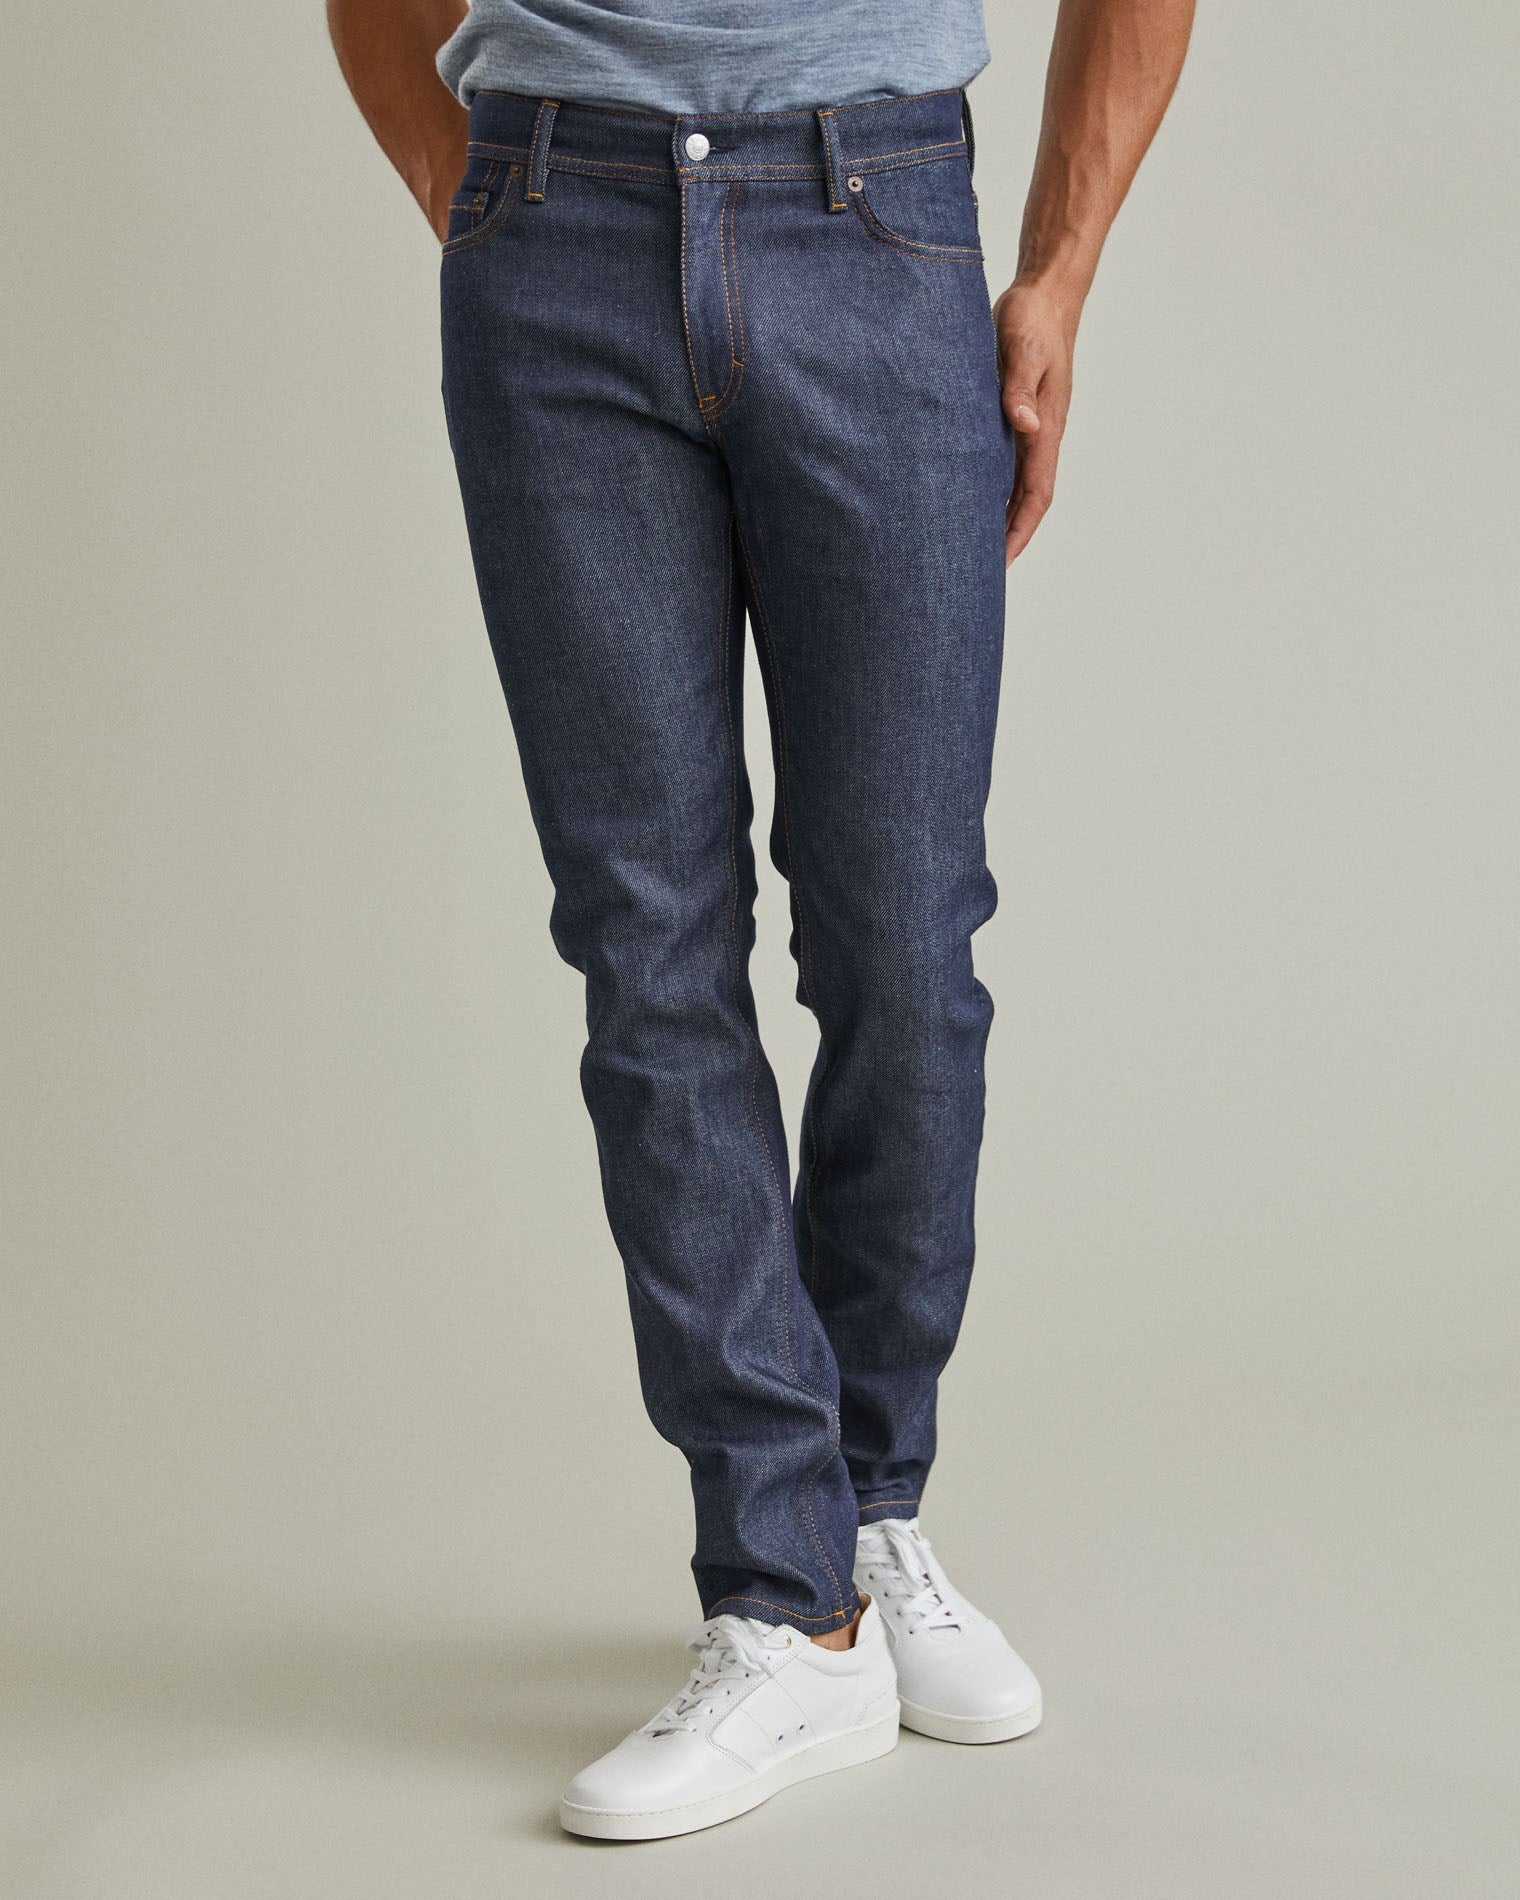 jeans similar to nydj